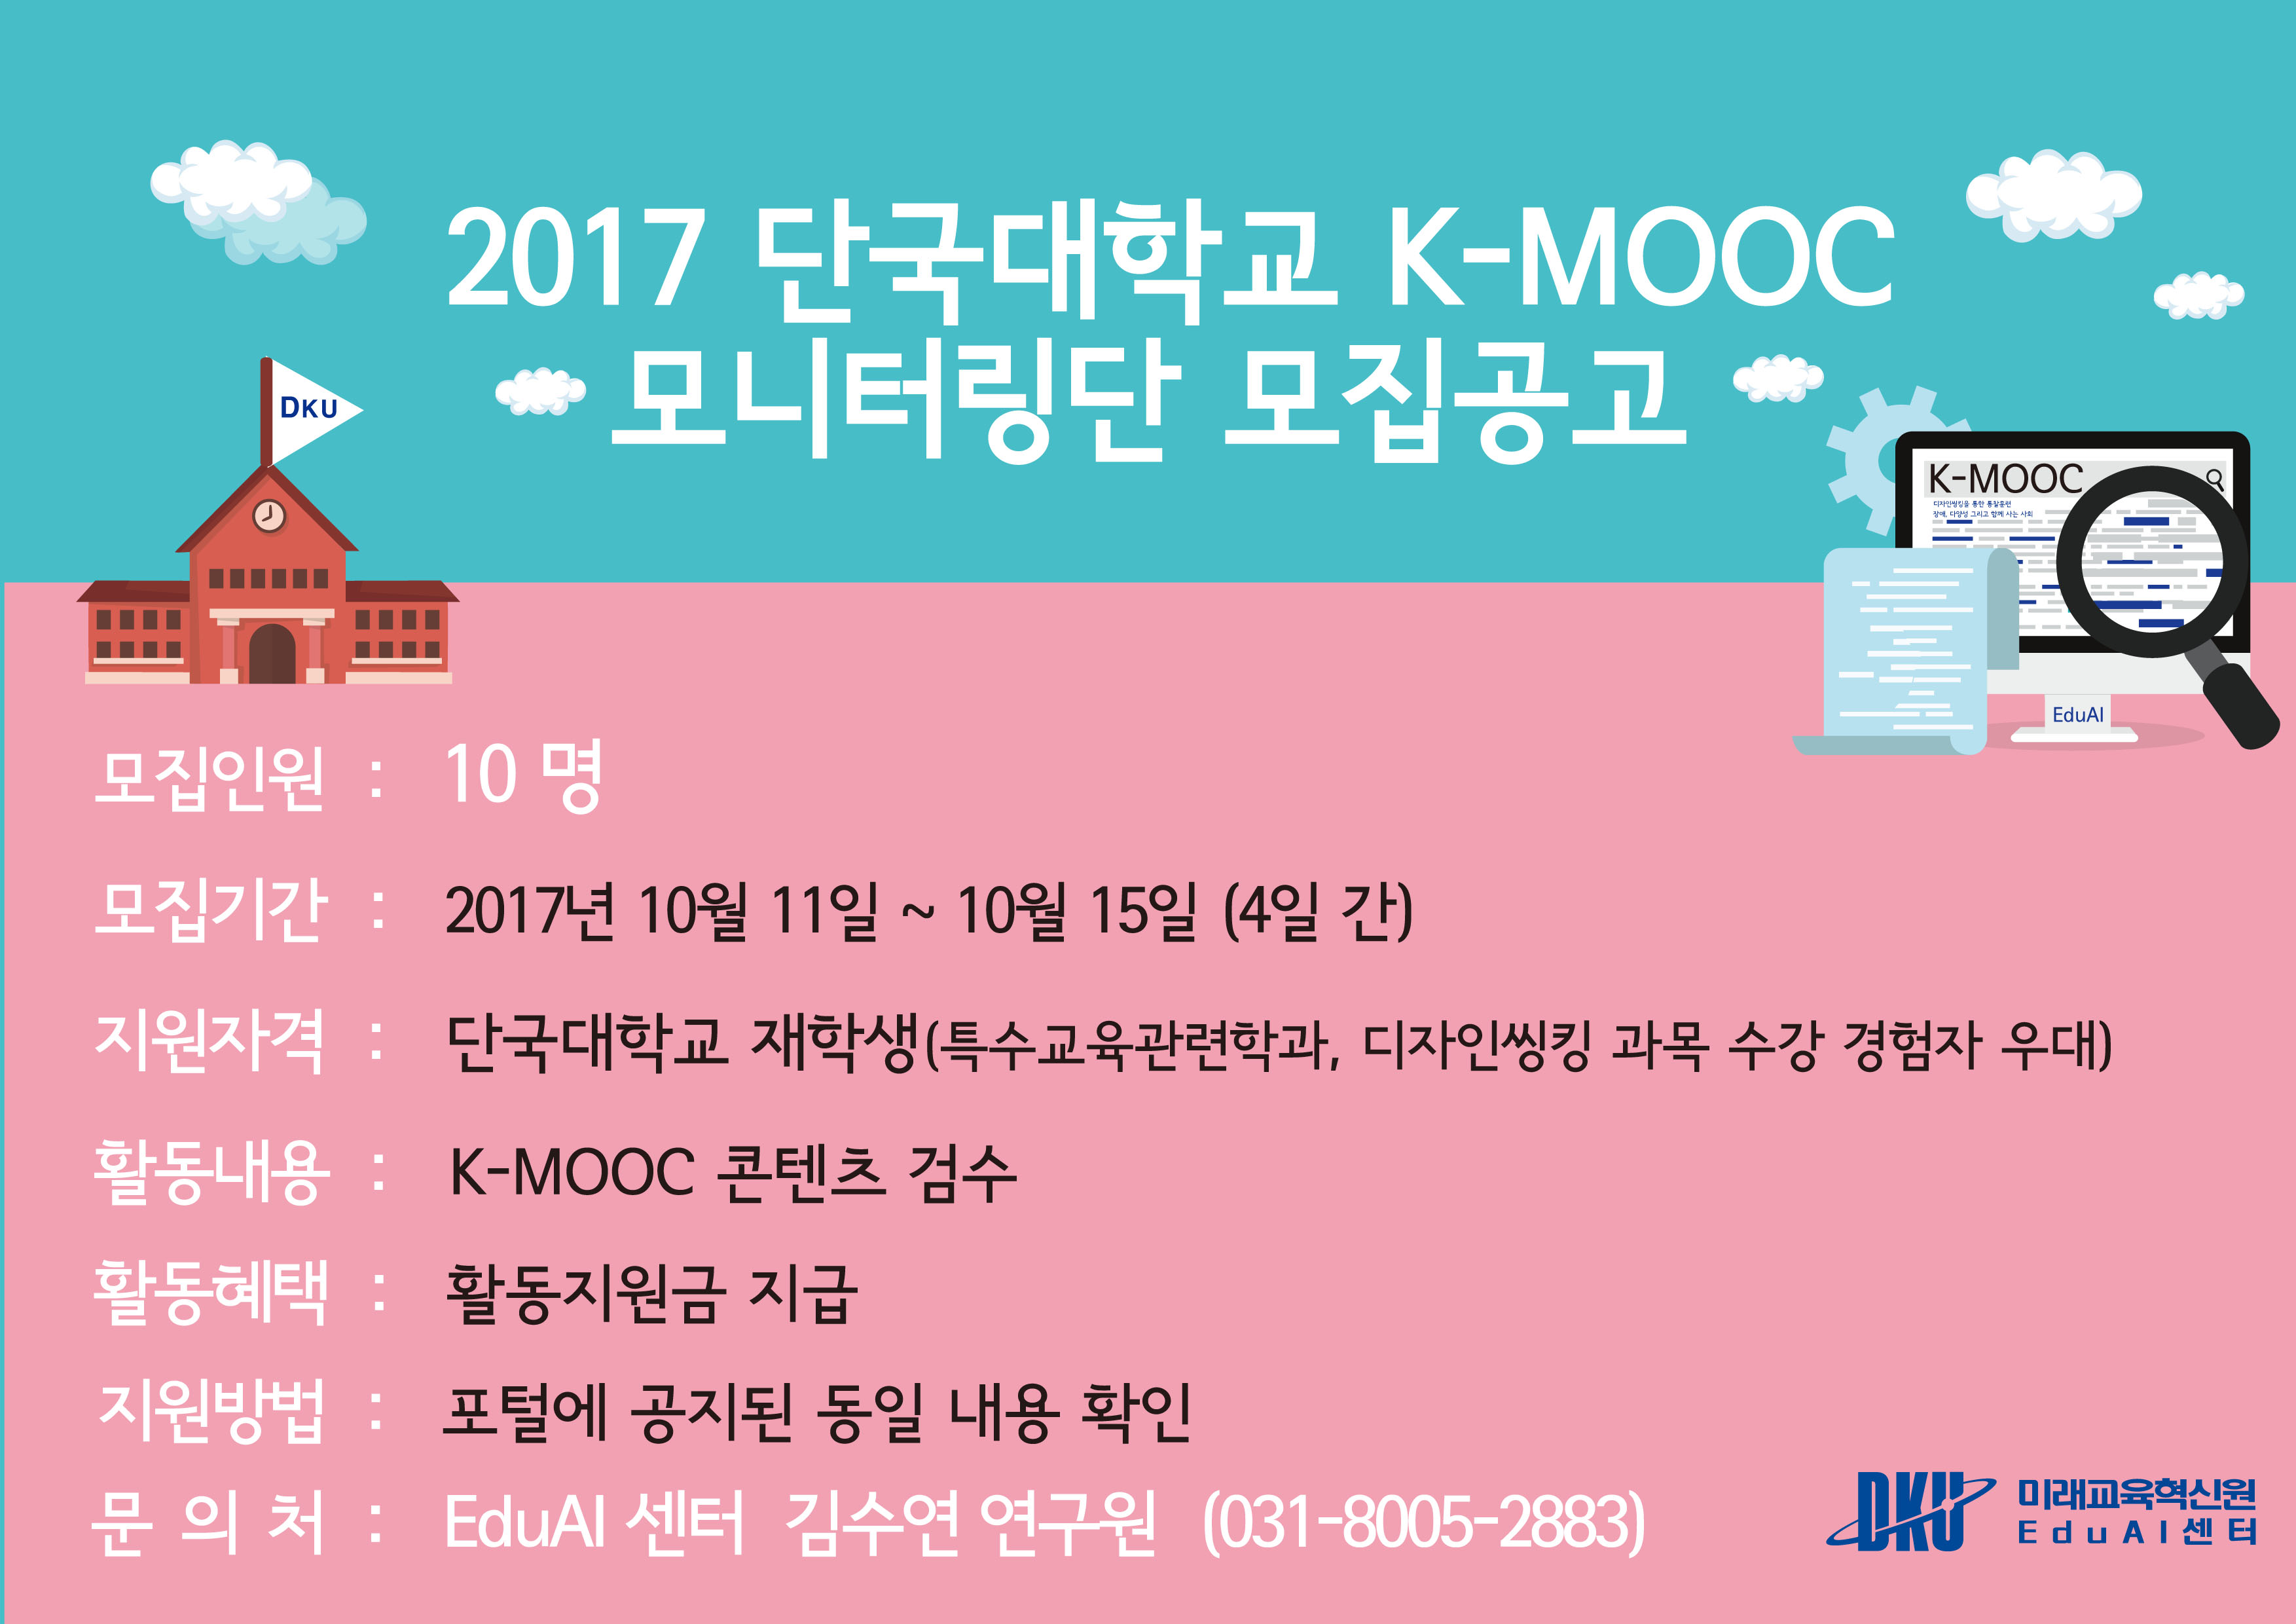 K-MOOC 플랫폼 연수(고급과정)-실습 개강일 2017-10-23 종강일 2018-01-15 강좌상태 종료